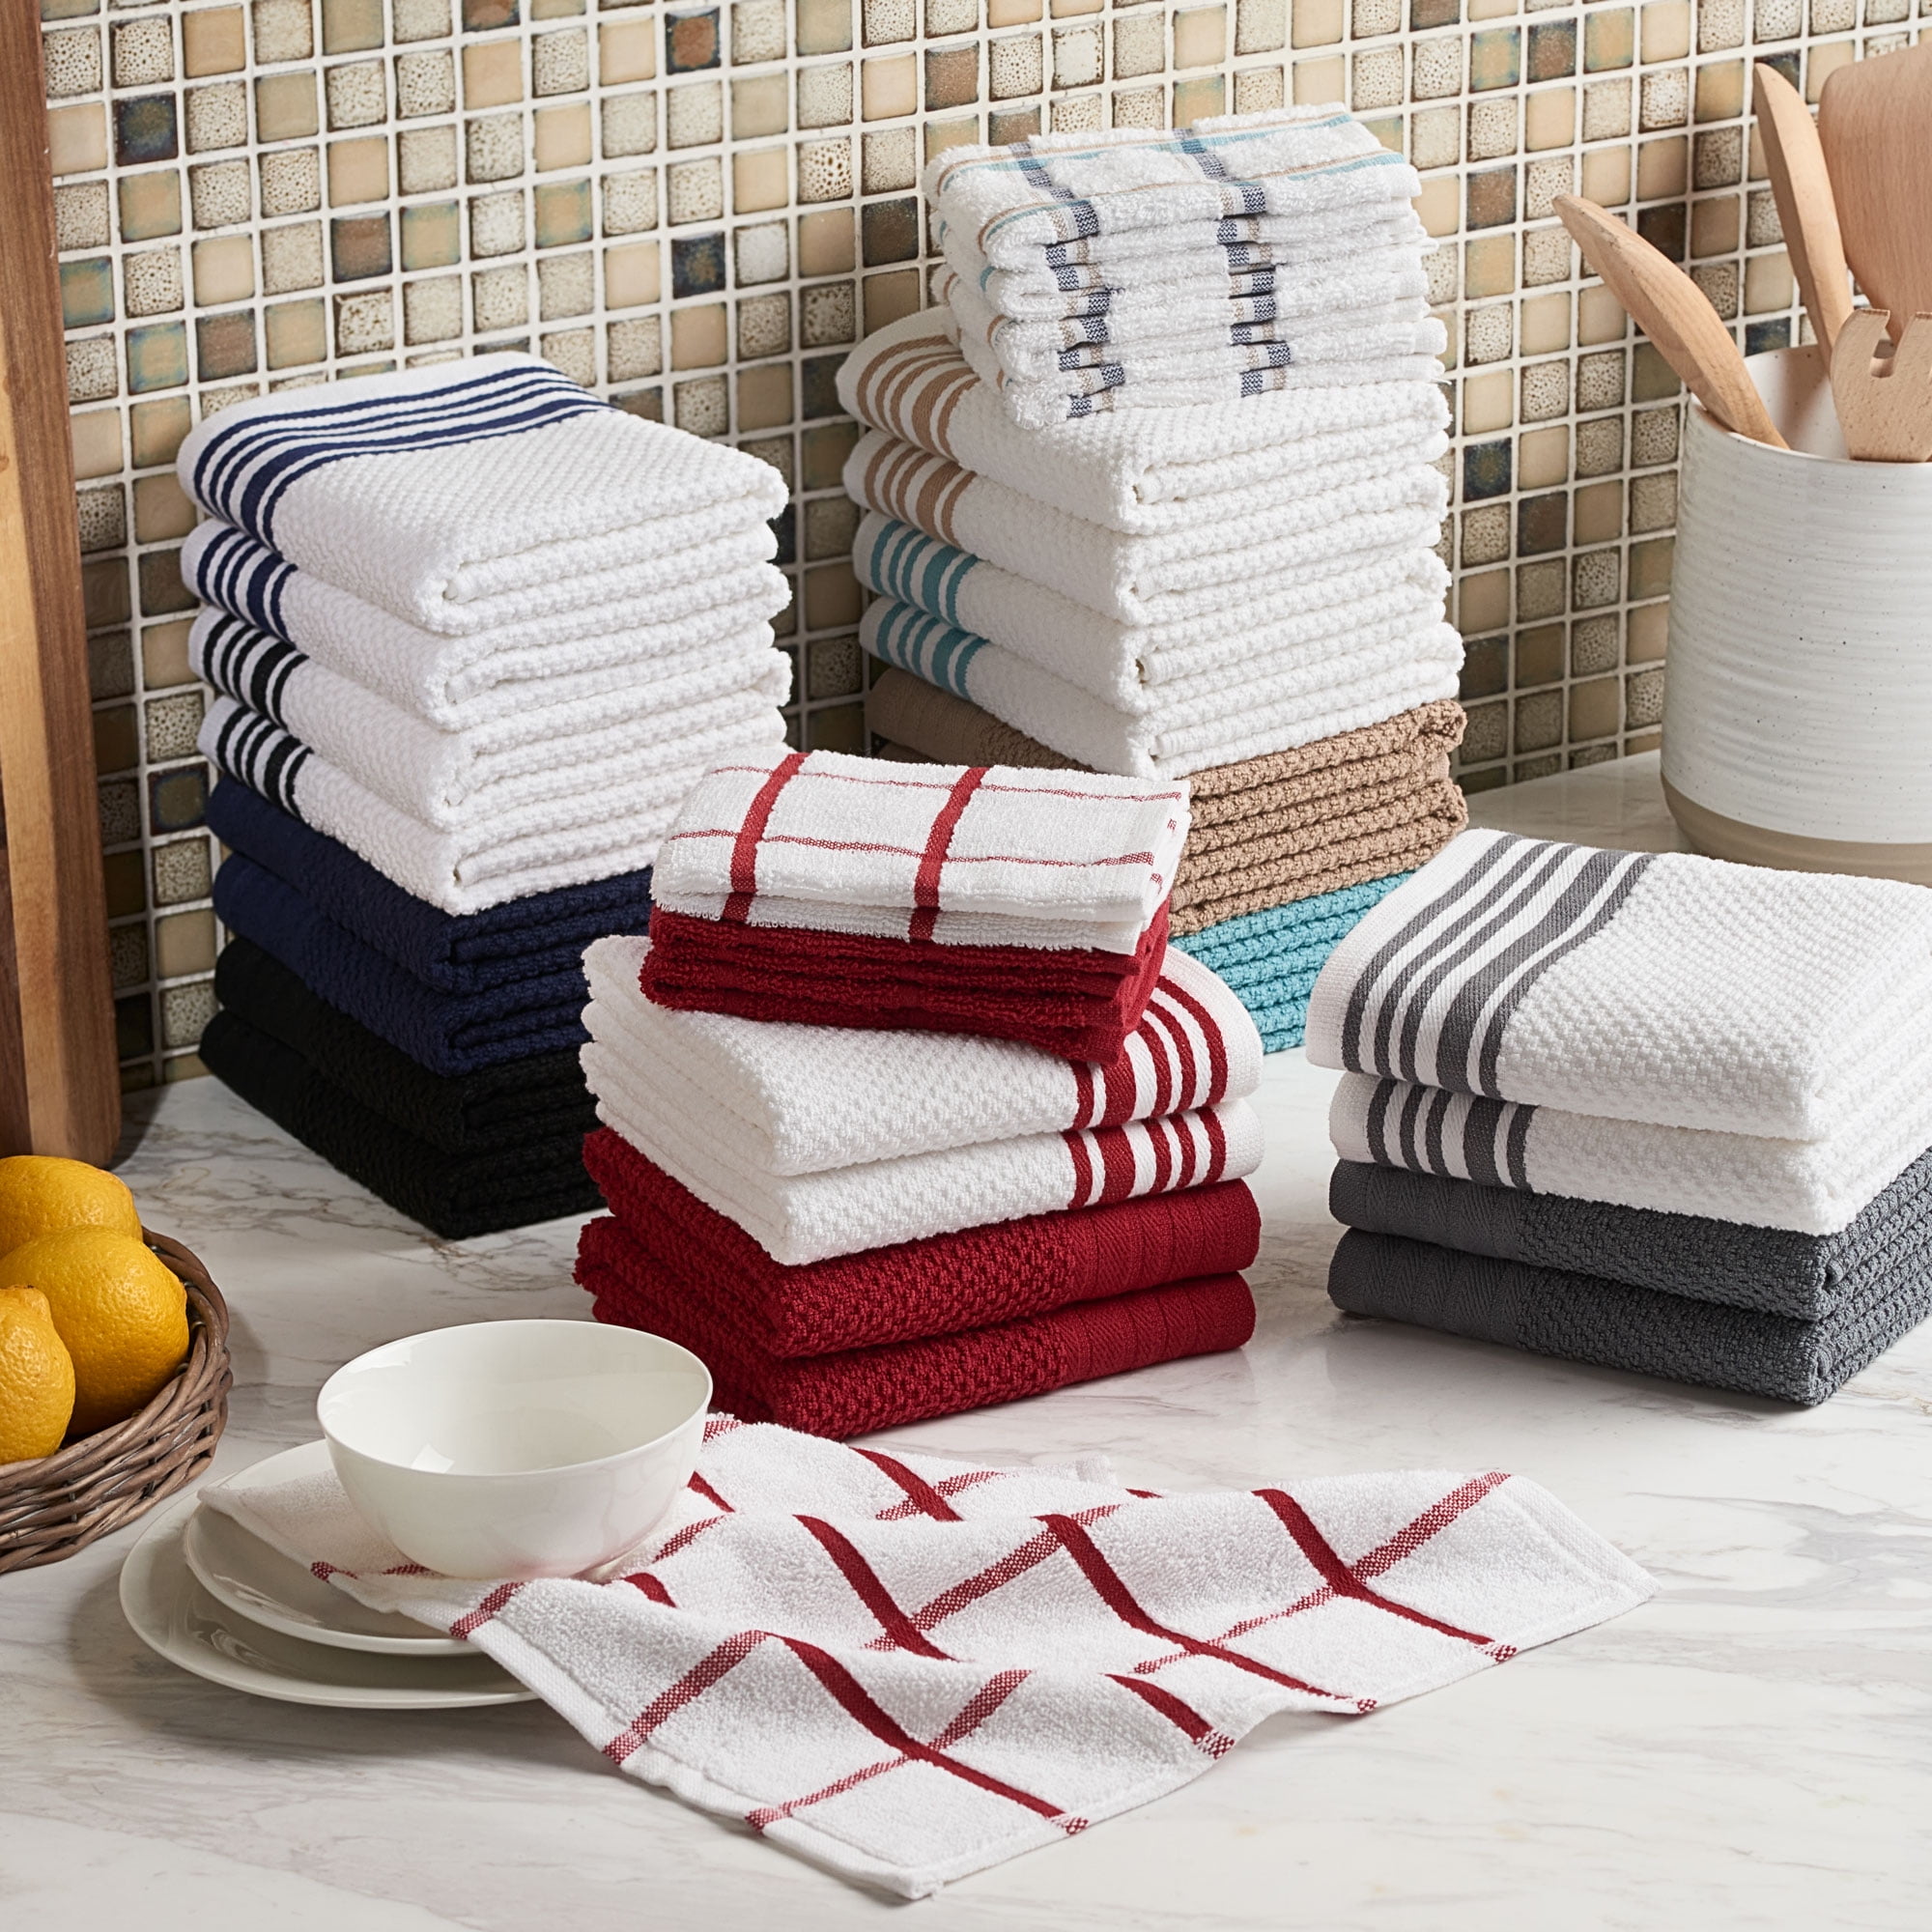 Dish Cloth Sets/dish Towels/wash Cloths/spa Cloths/kitchen  Accessories/kitchen Decor/hand Towel/crocheted Kitchen Set/dish Cloths/eco  Cloths 